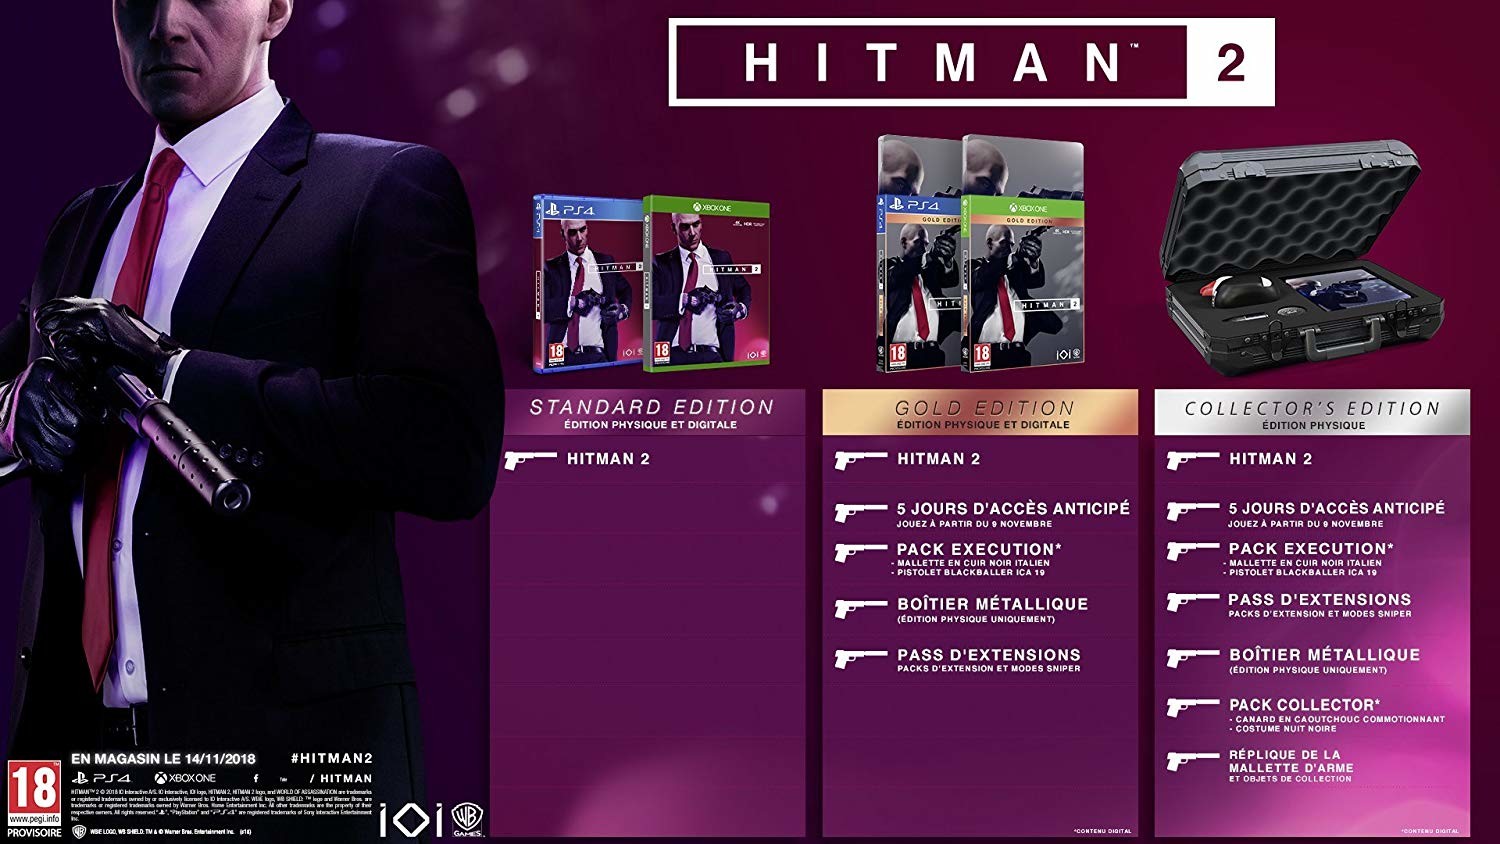 Hitman 2 купить. Хитман 2 ПС 4 Голд эдишн. Hitman 2 Gold Edition обложка. Хитман 2 Gold Edition Xbox one. PLAYSTATION 4 komplekt Hitman 2.